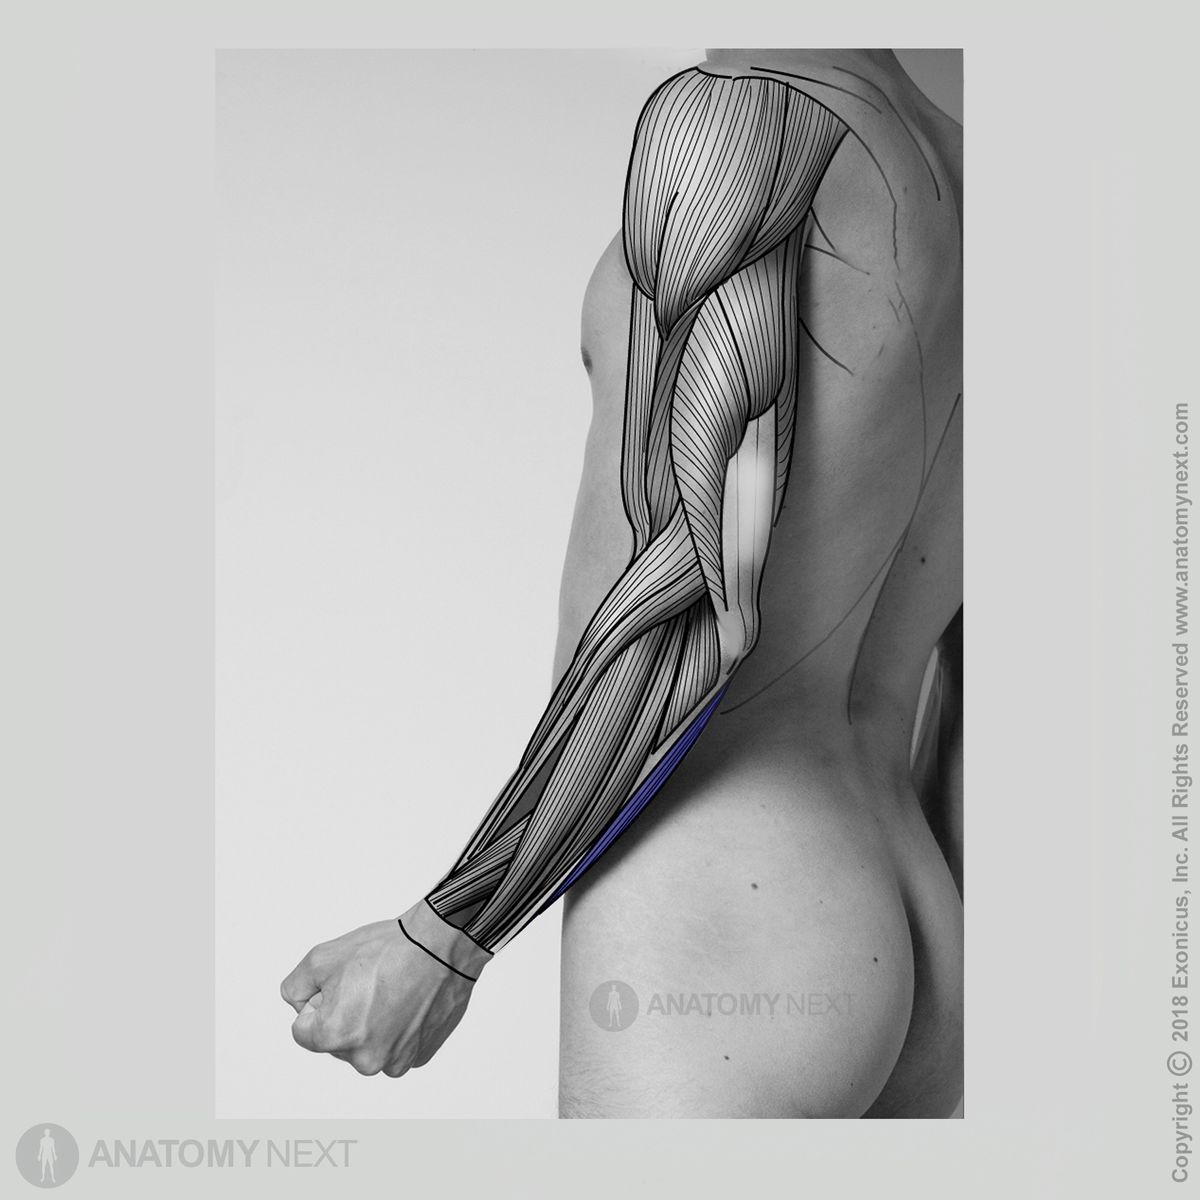 Flexor carpi ulnaris, Forearm muscles, Muscles of forearm, Muscles of upper limb, Arm muscles, Anterior forearm compartment, Anterior compartment muscles, Anterior compartment of forearm, Human muscles